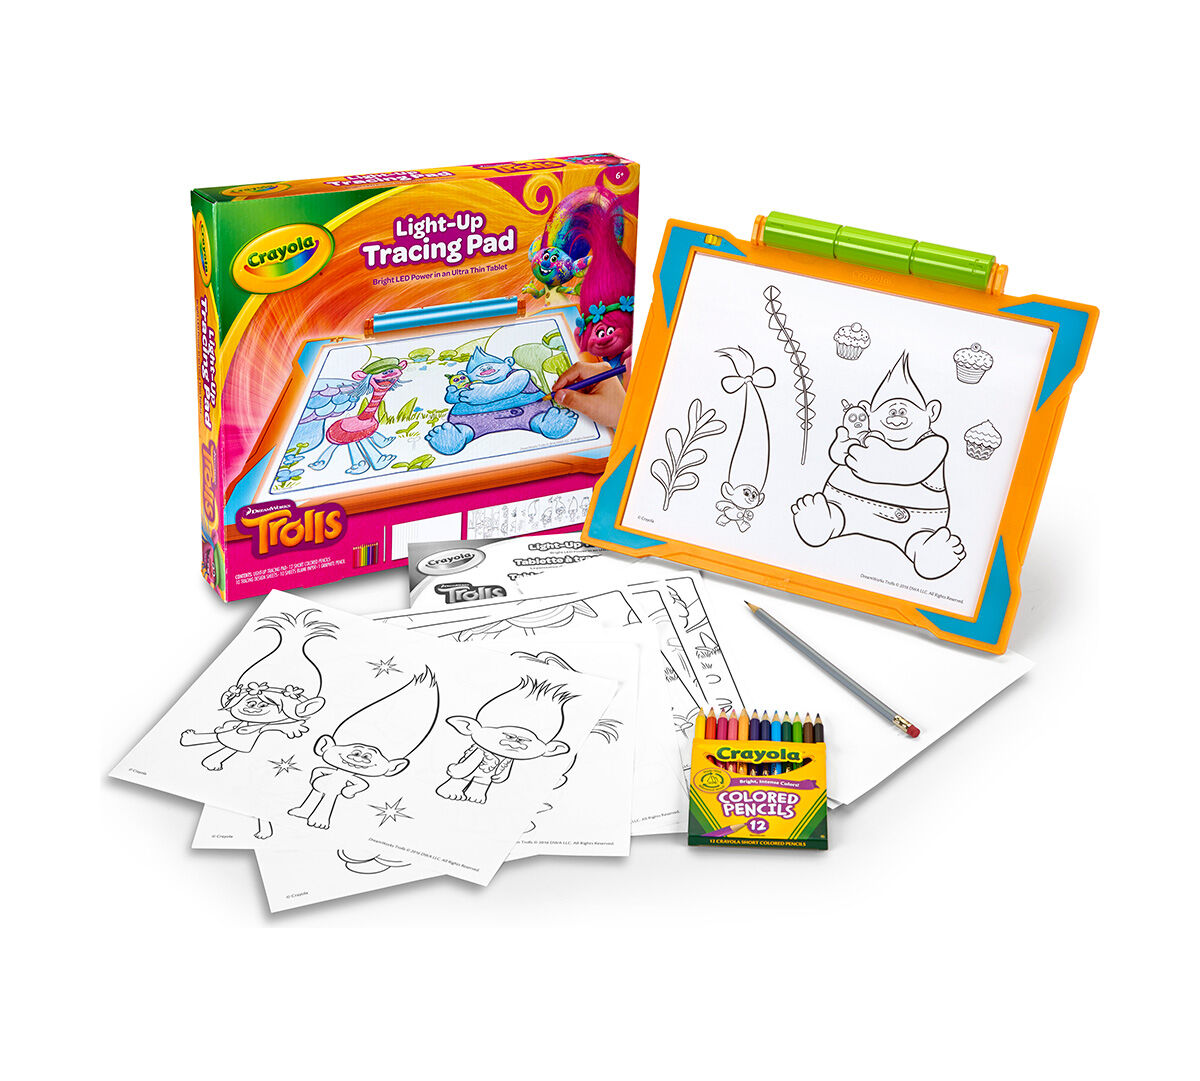 Trolls Light Up Tracing Pad for Kids, Crayola.com